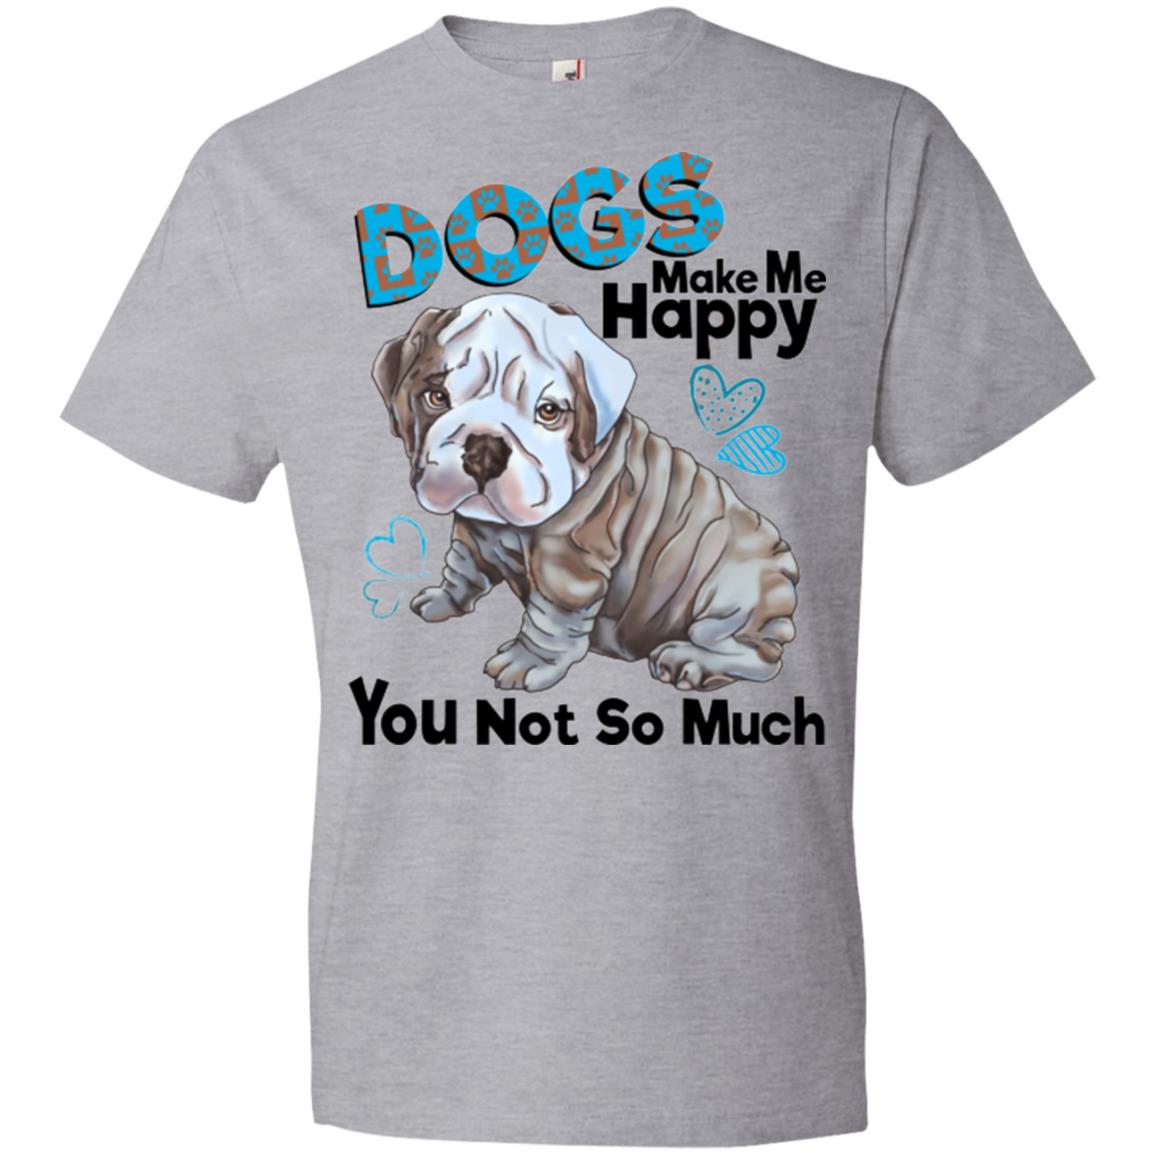 English bulldog premium T-shirt for Men, Women, Dogs Make Me Happy - GoneBold.gift